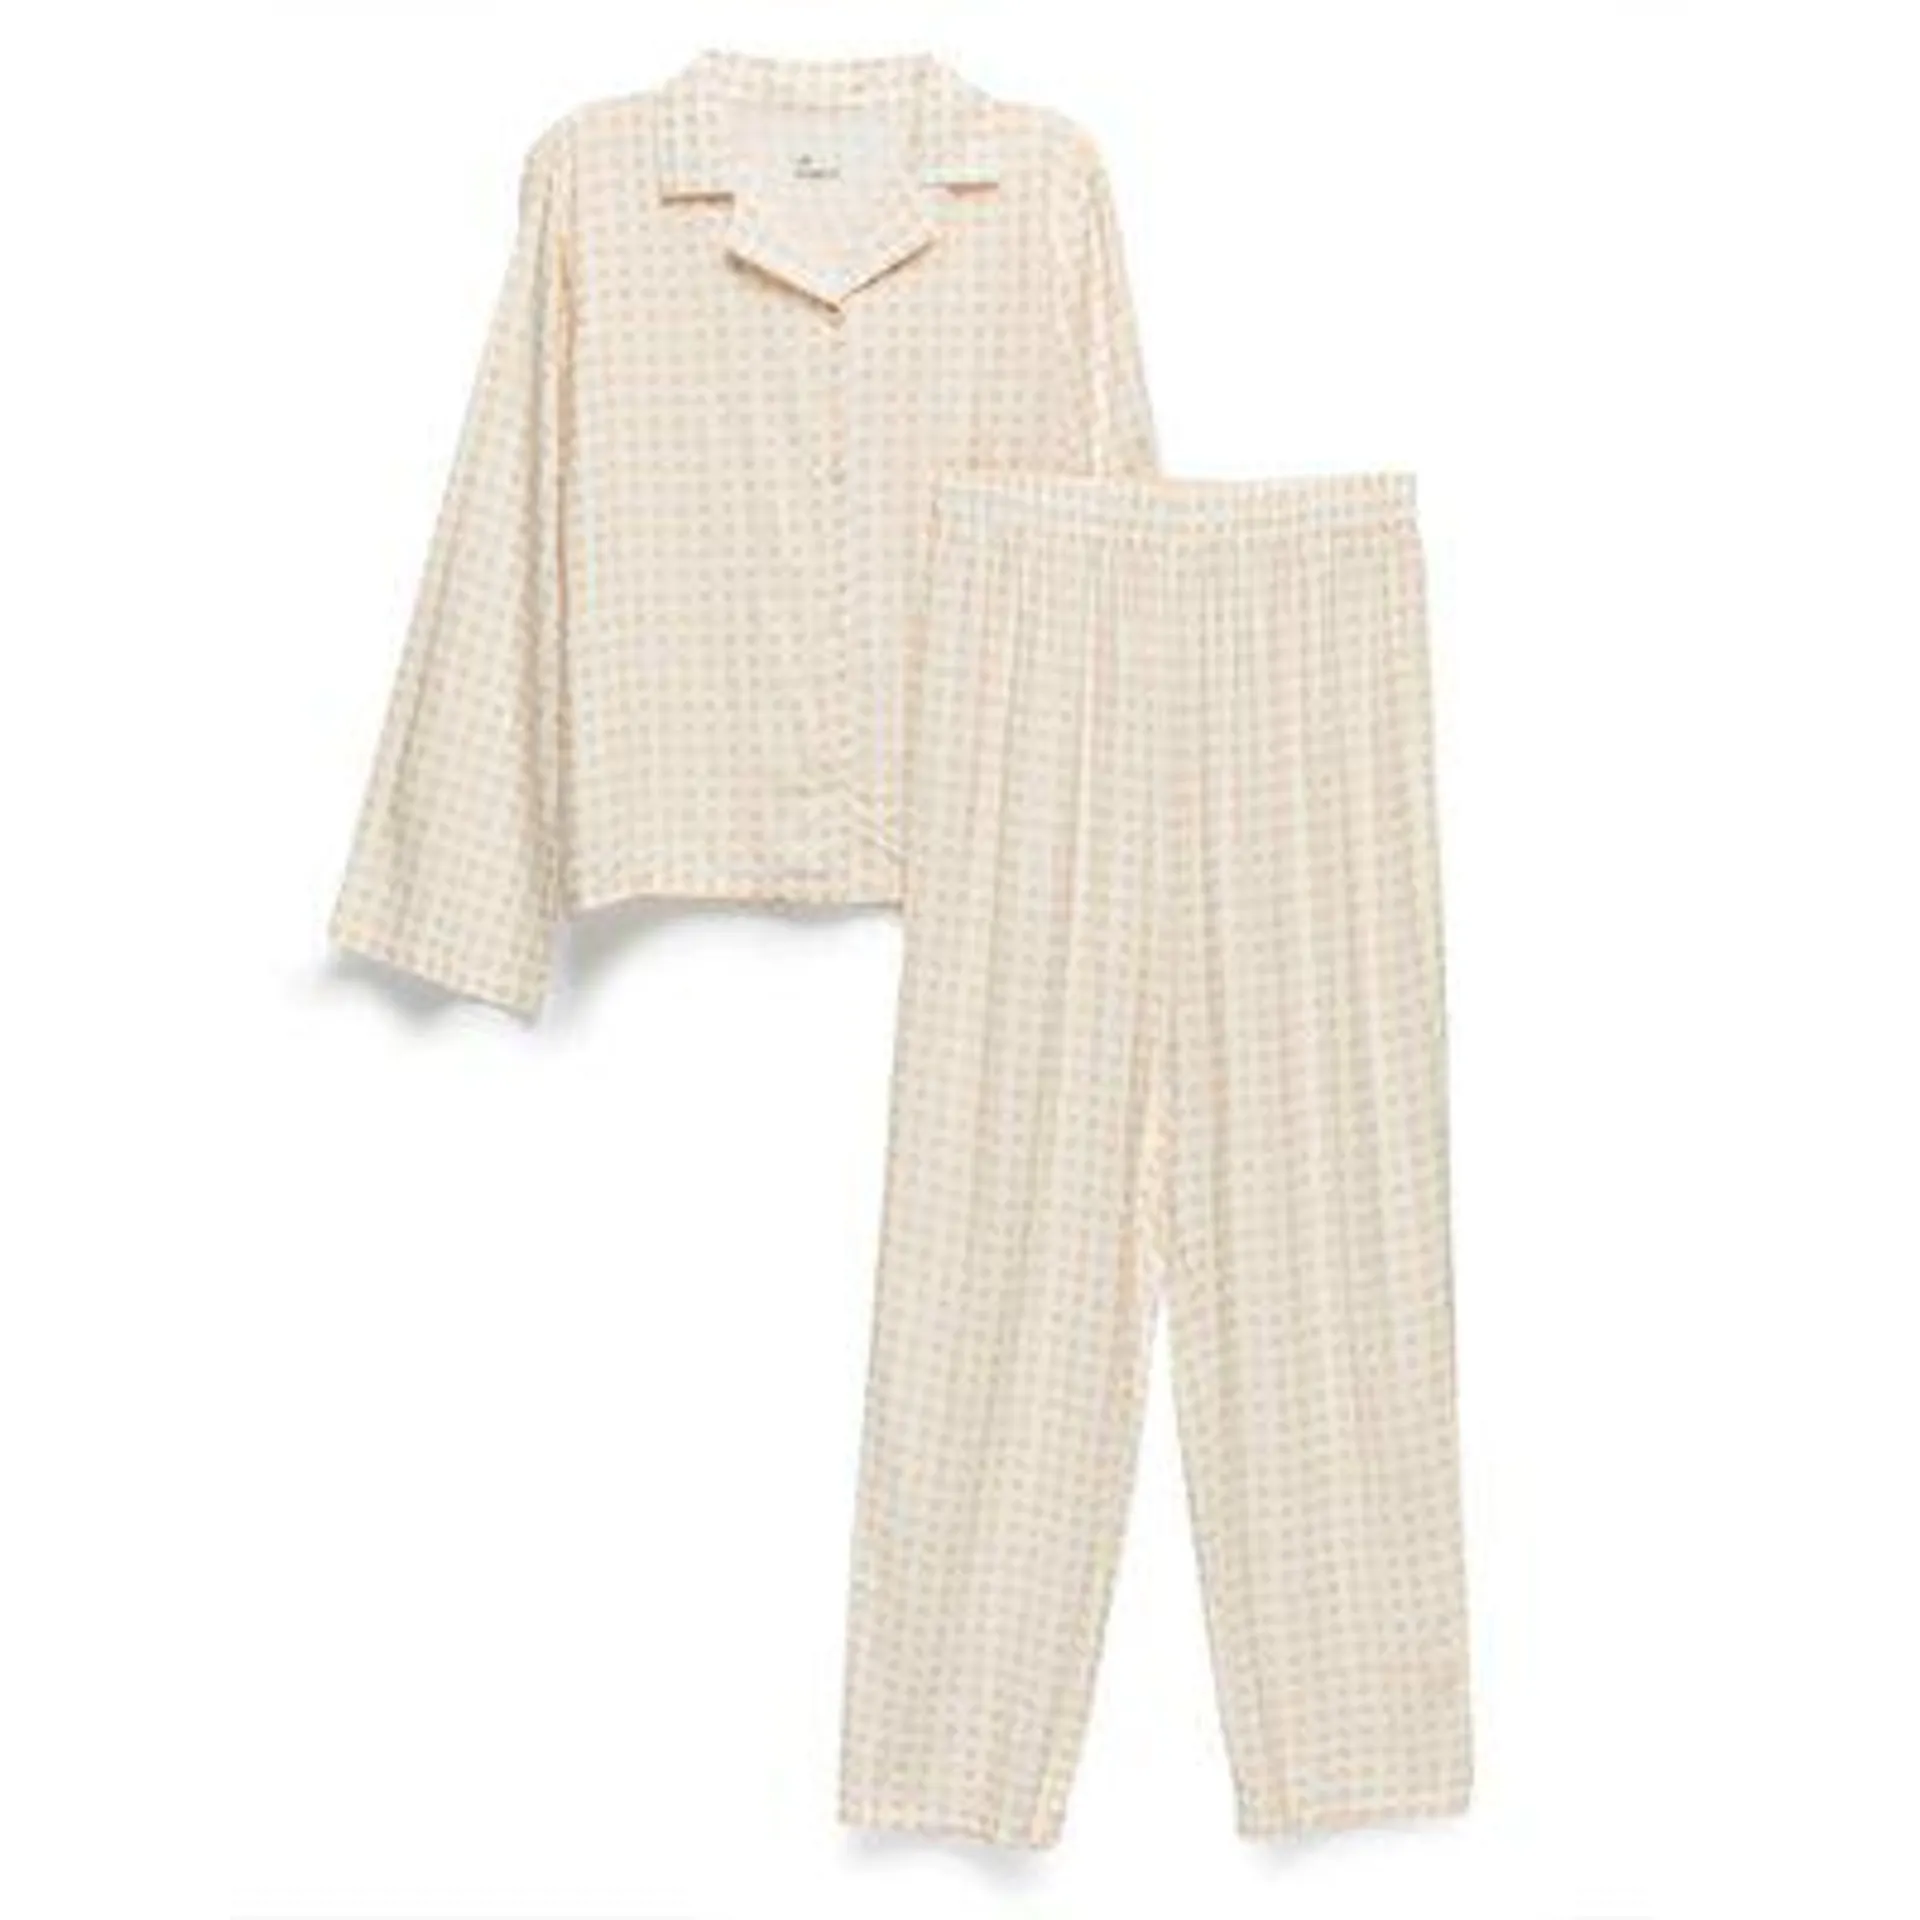 Pijama Camisera Larga Mujer Full Print Talla L